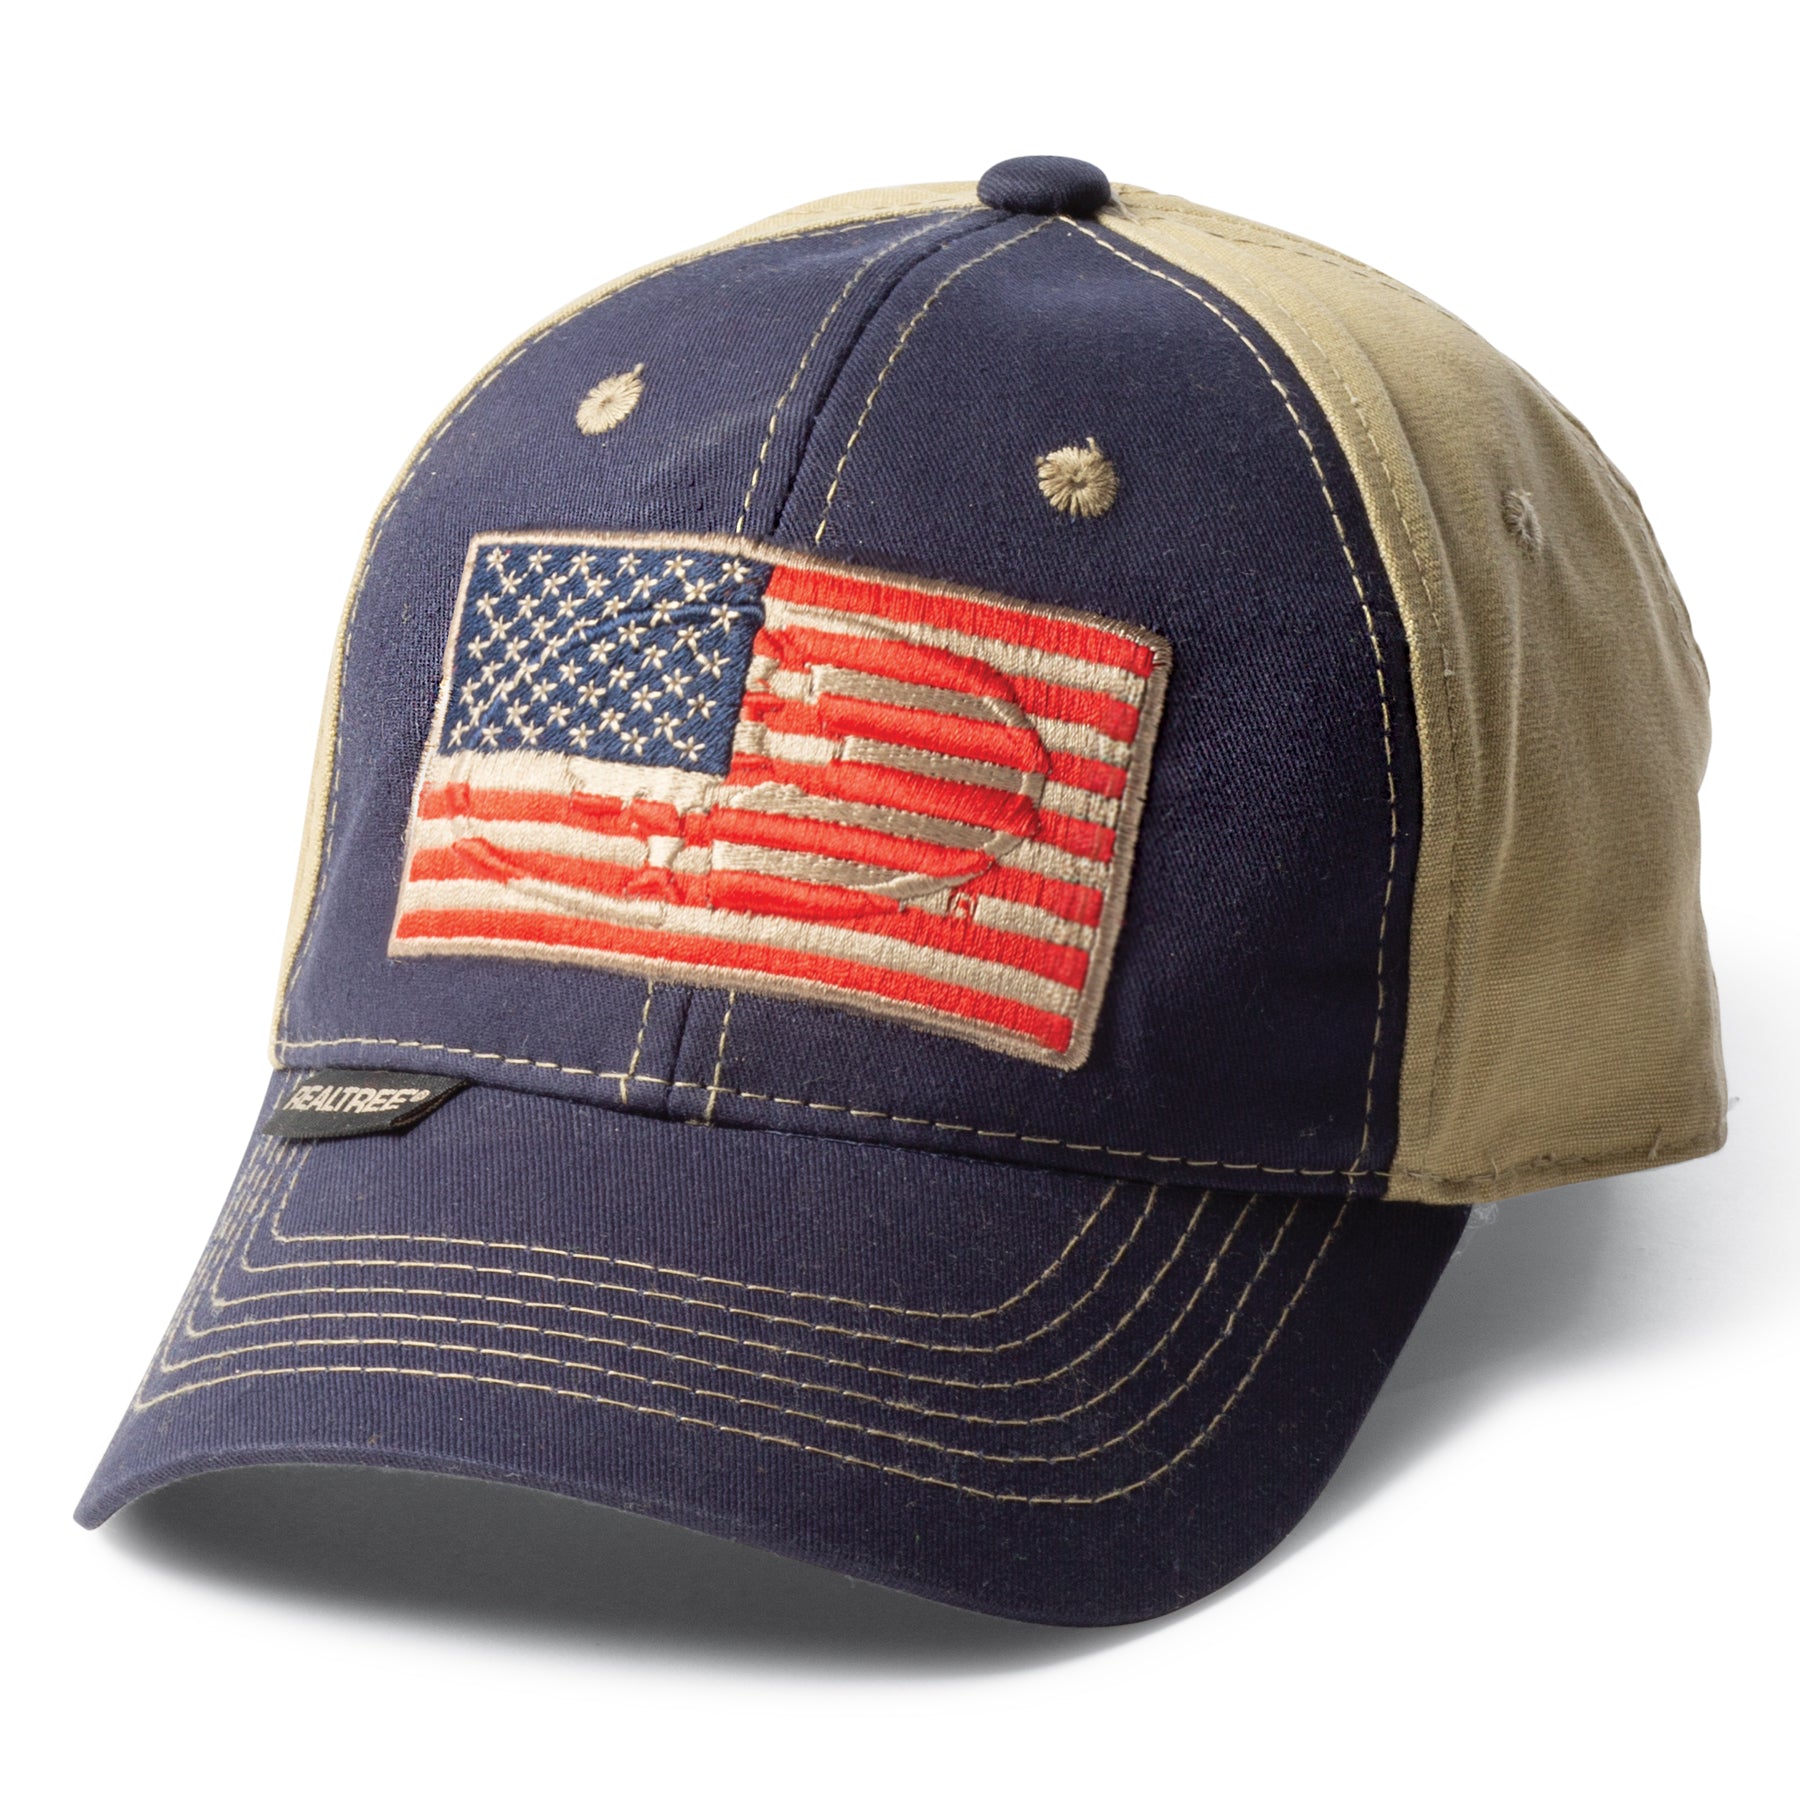 Mossy Oak Camo Hat American Flag Accent Adjustable NEW Andritz Metals